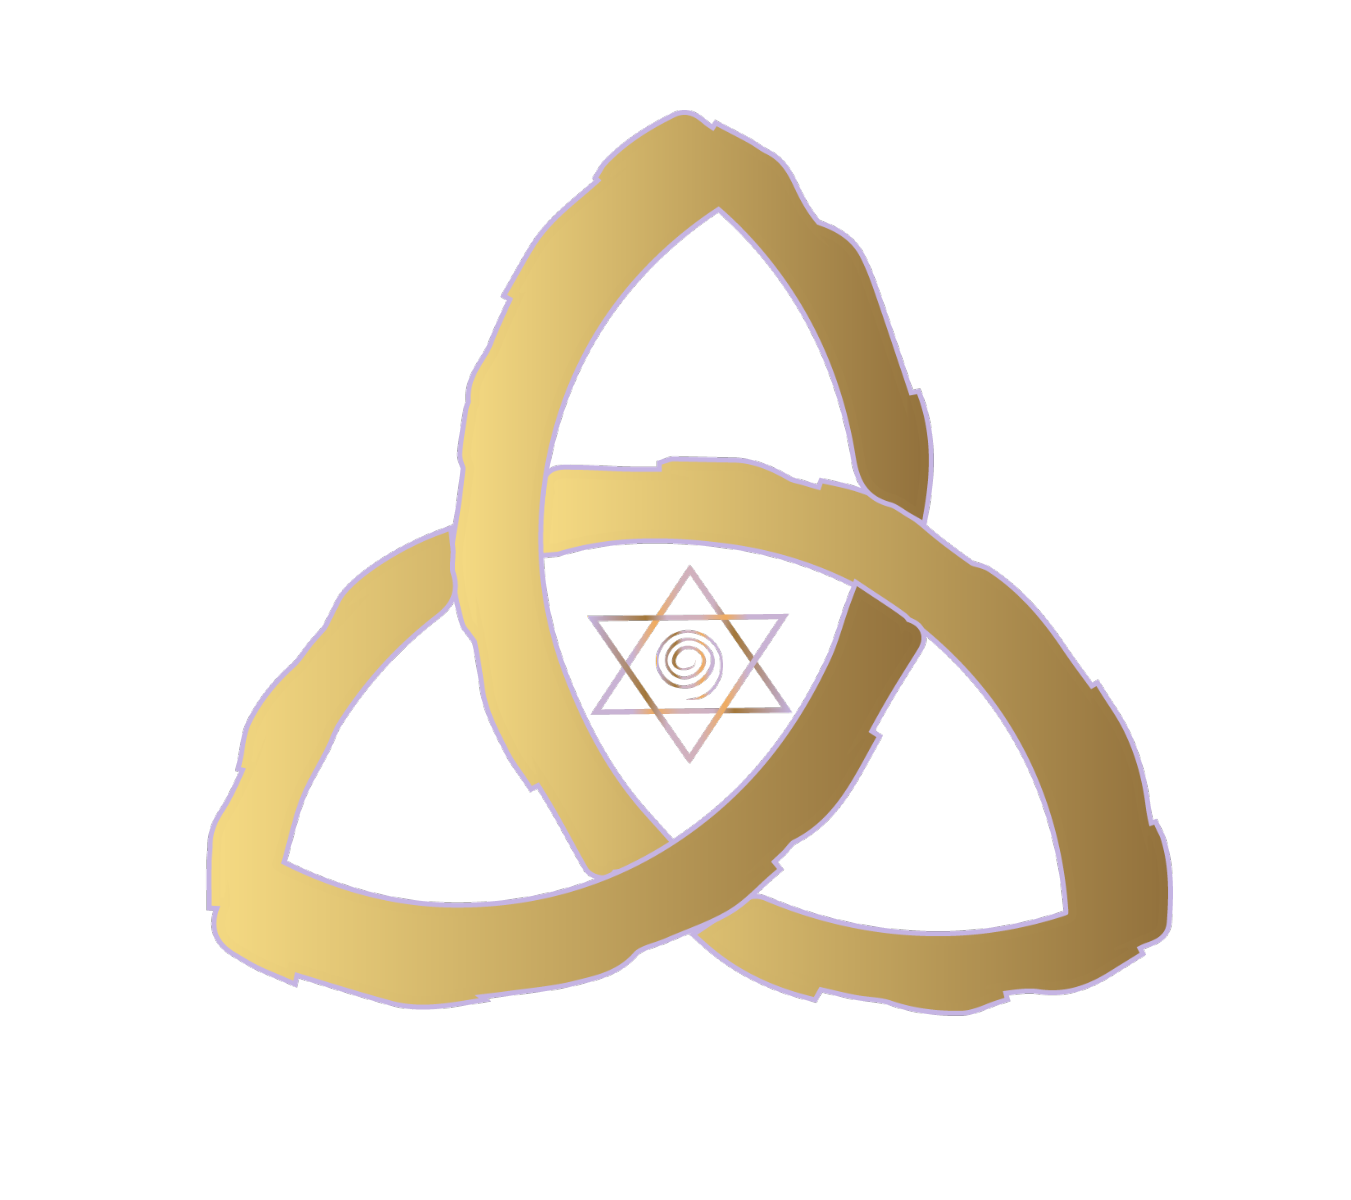 The Consciousness and Guidance Centre logo